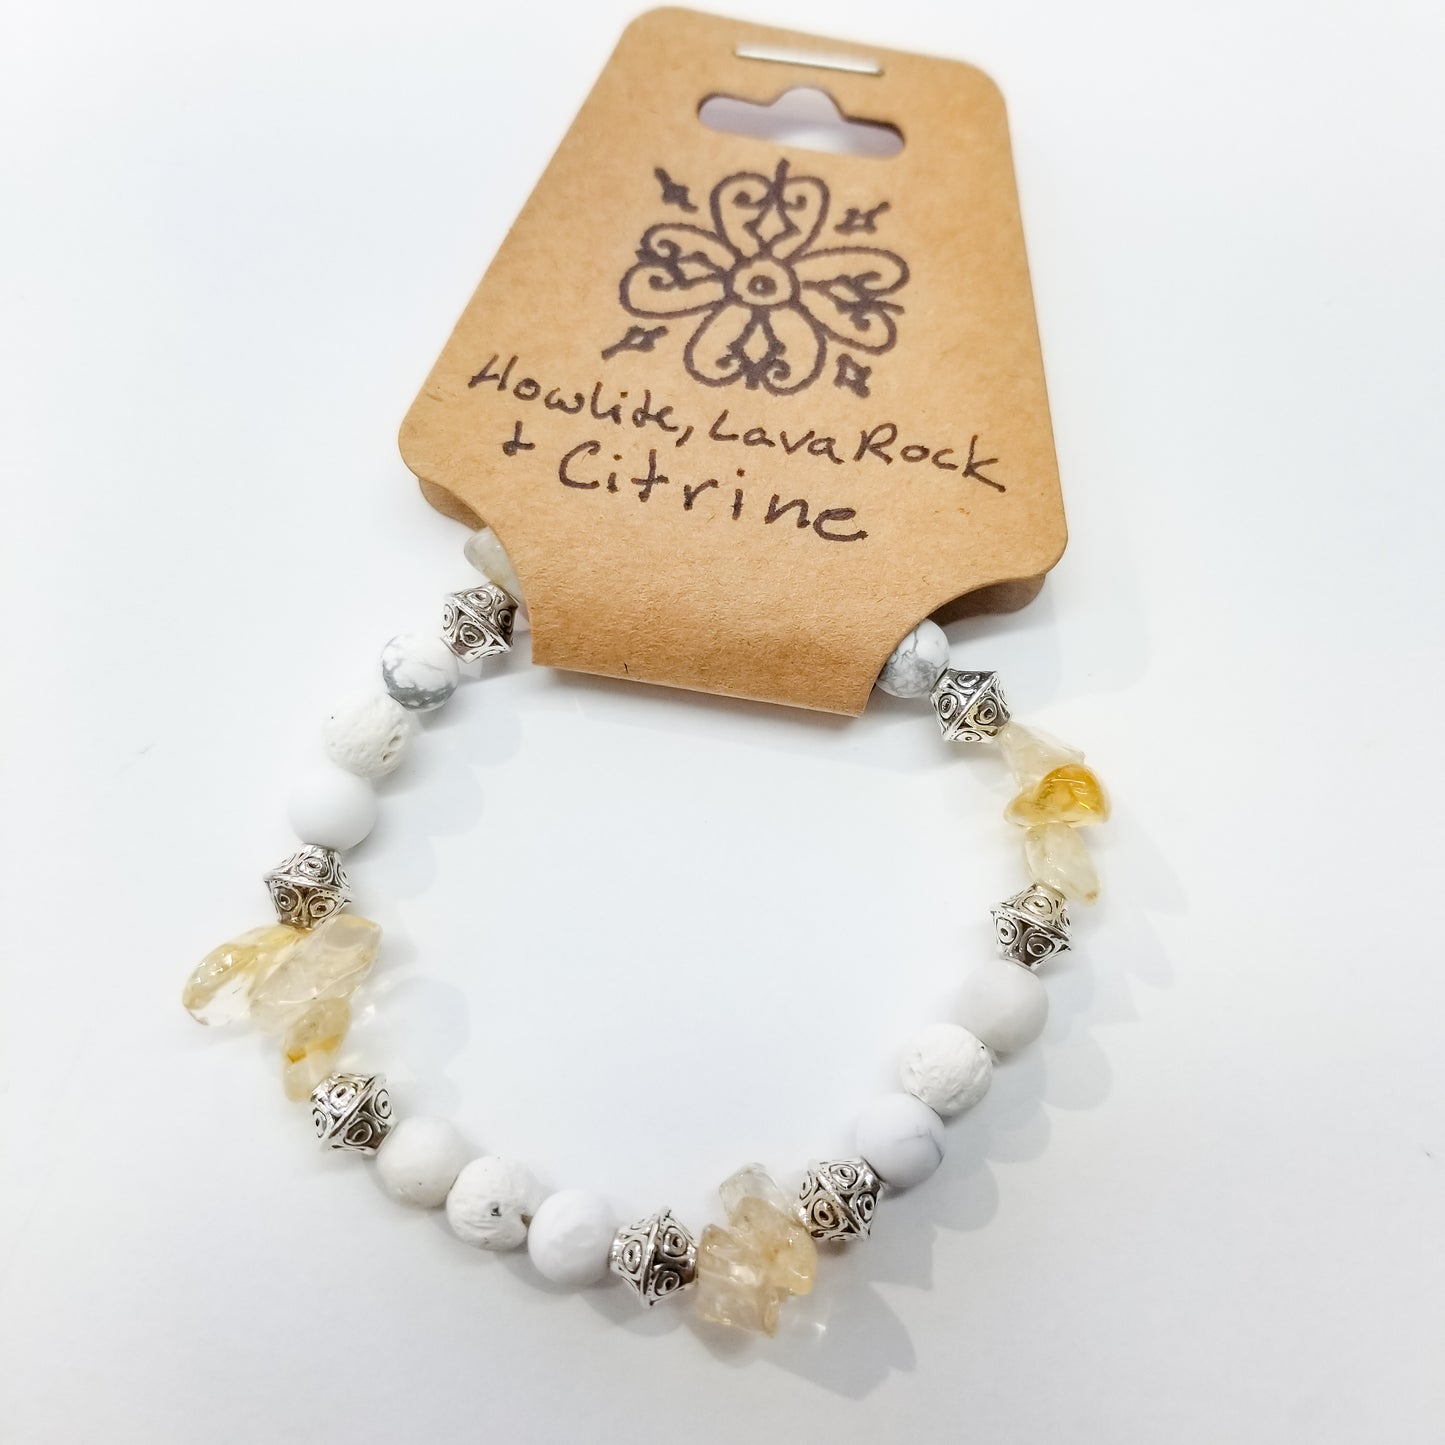 Citrine, Howlite & Lava Rock Crystal Bracelet